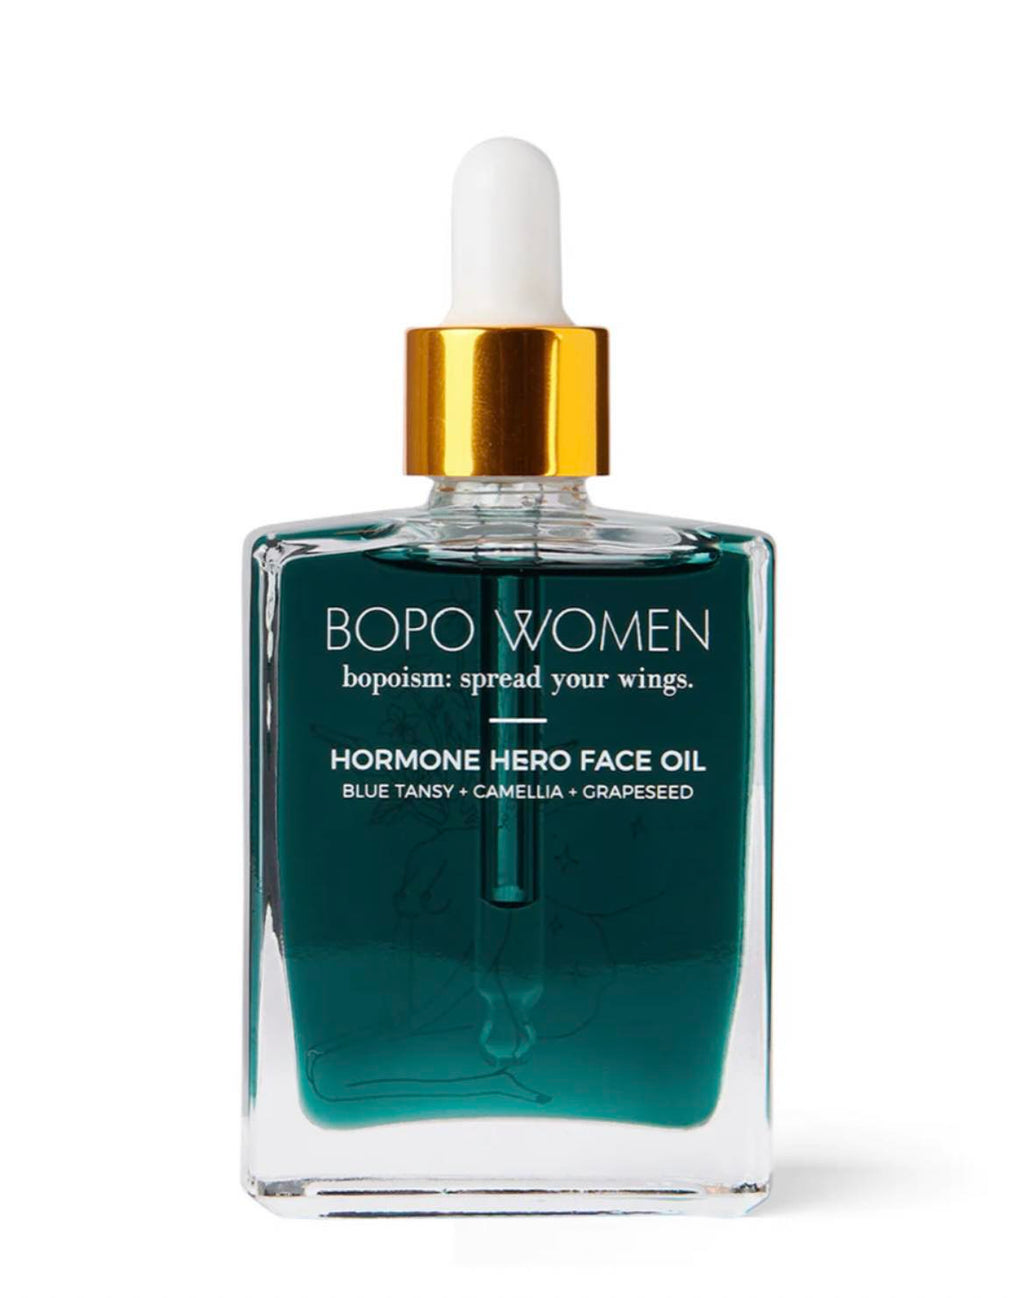 Bopo Women Hormone Hero Face Oil